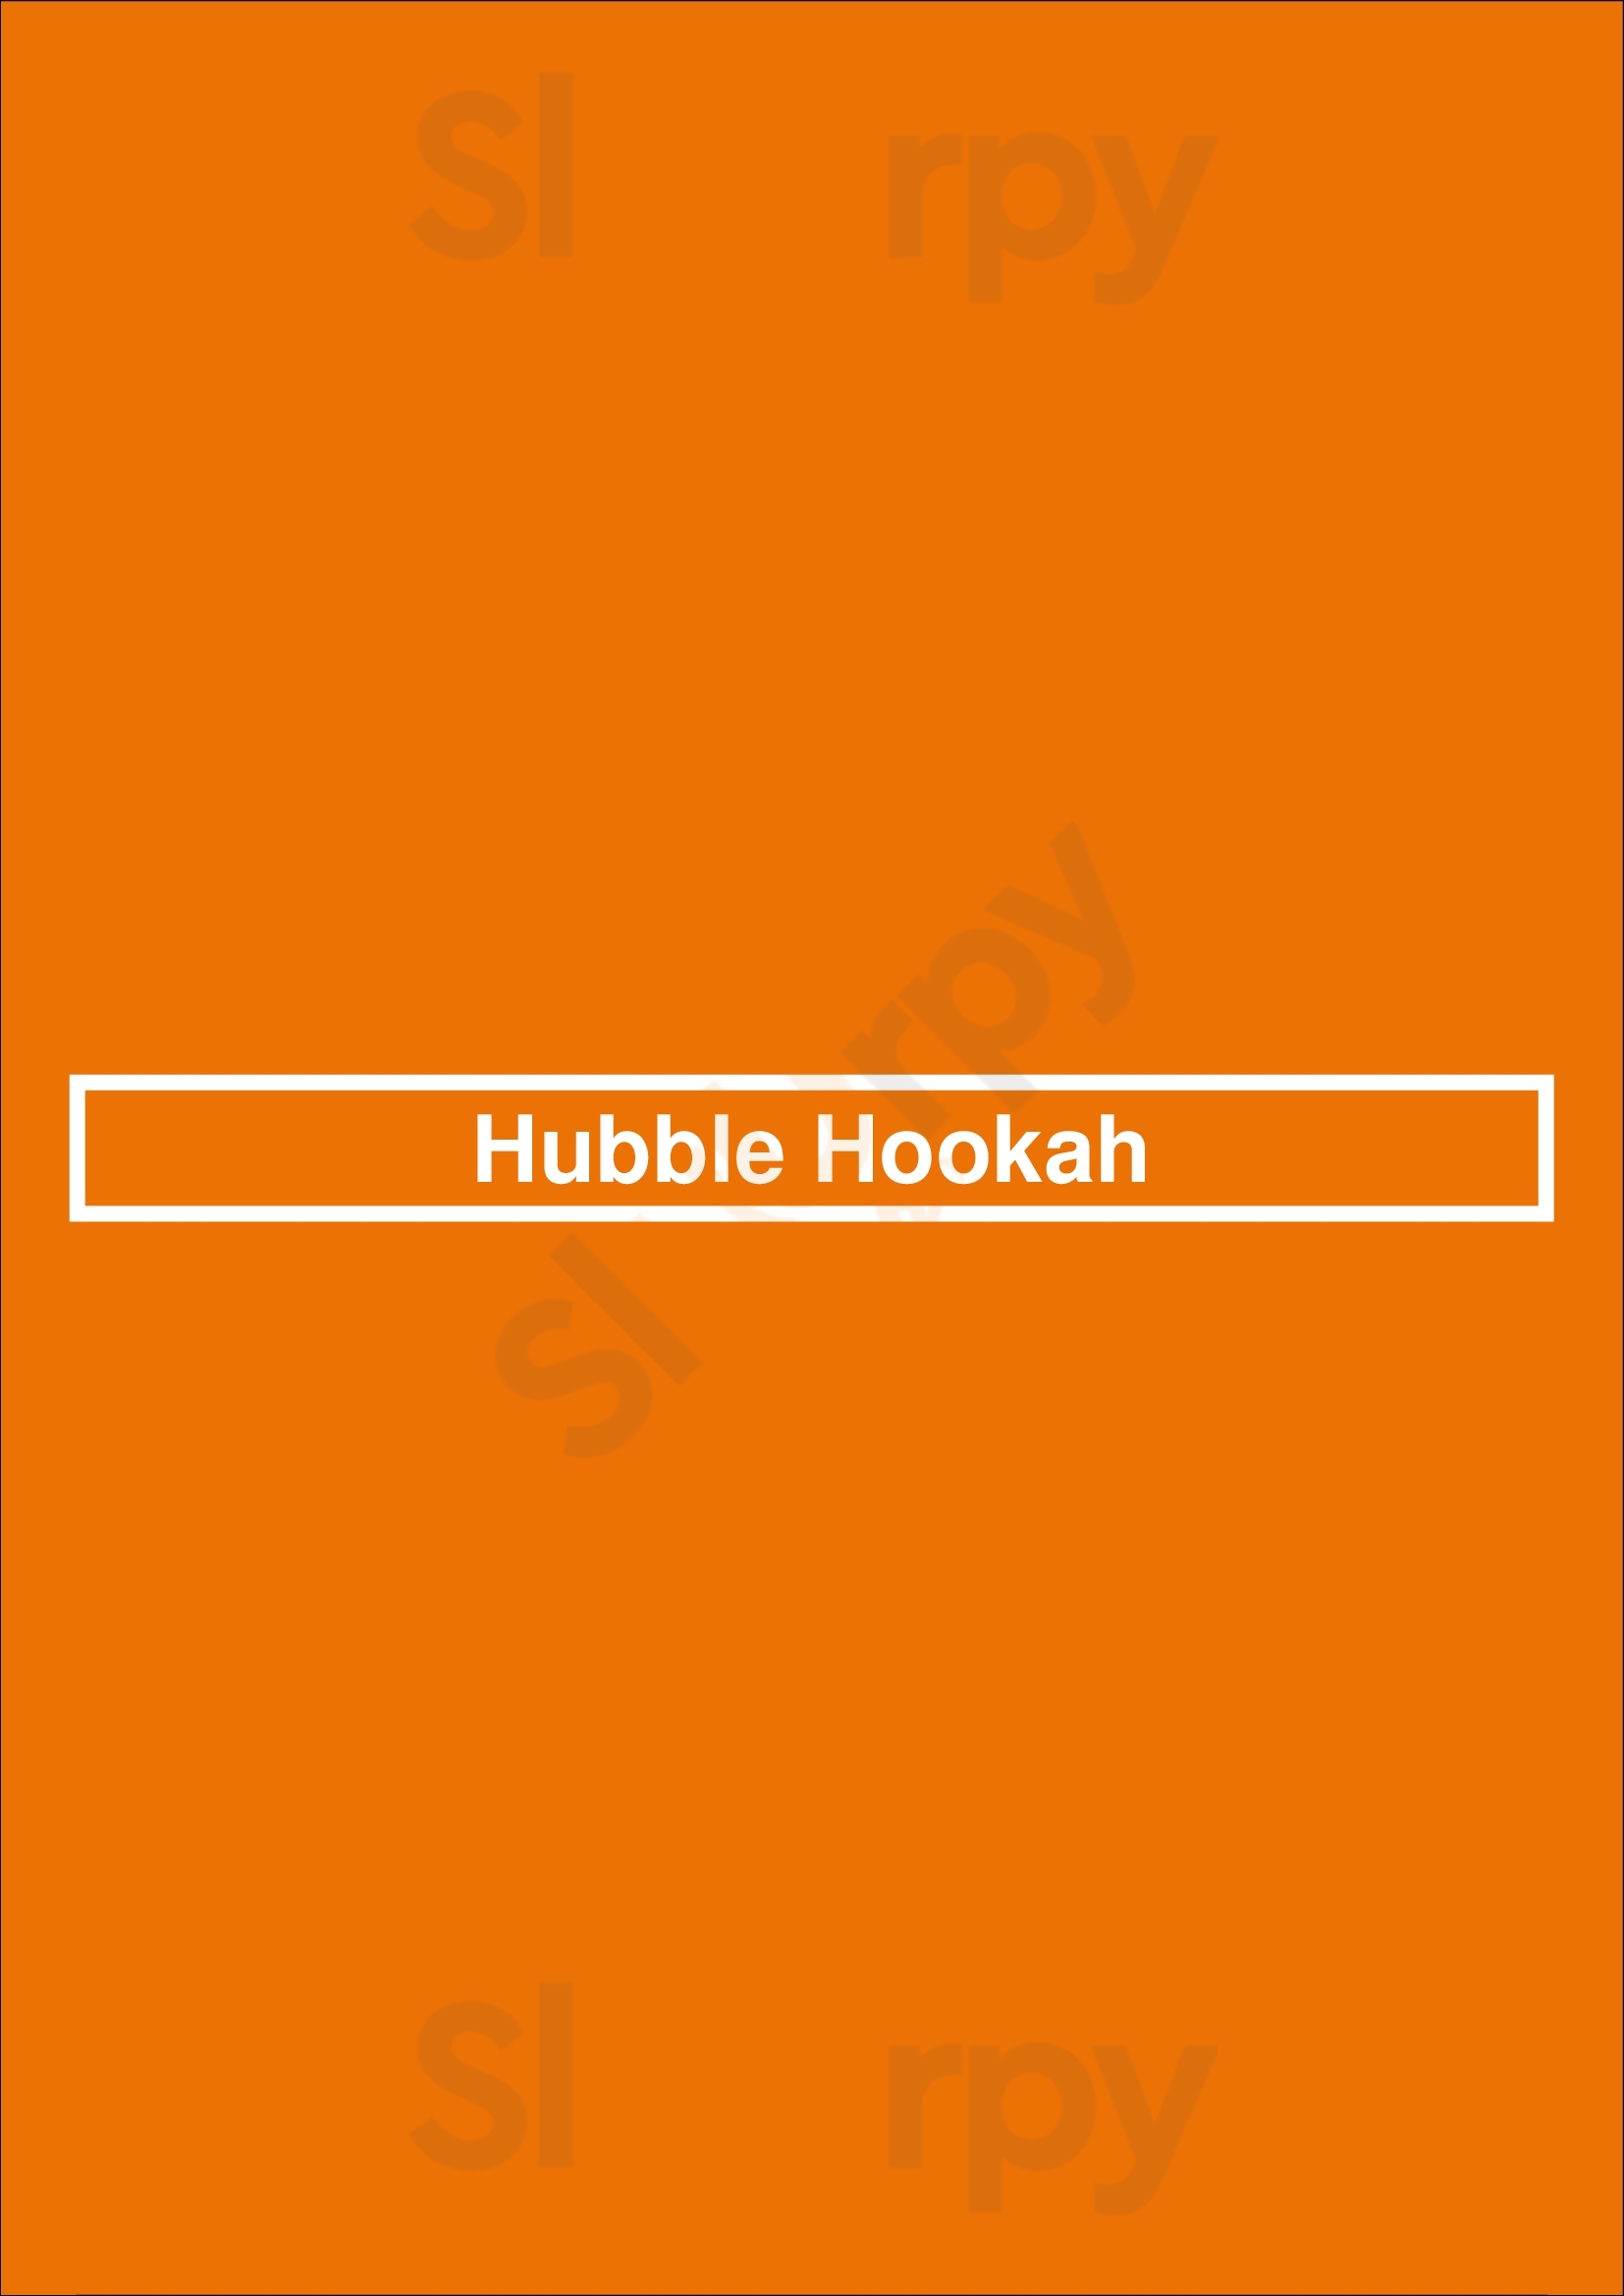 Hubble Hookah Chicago Menu - 1